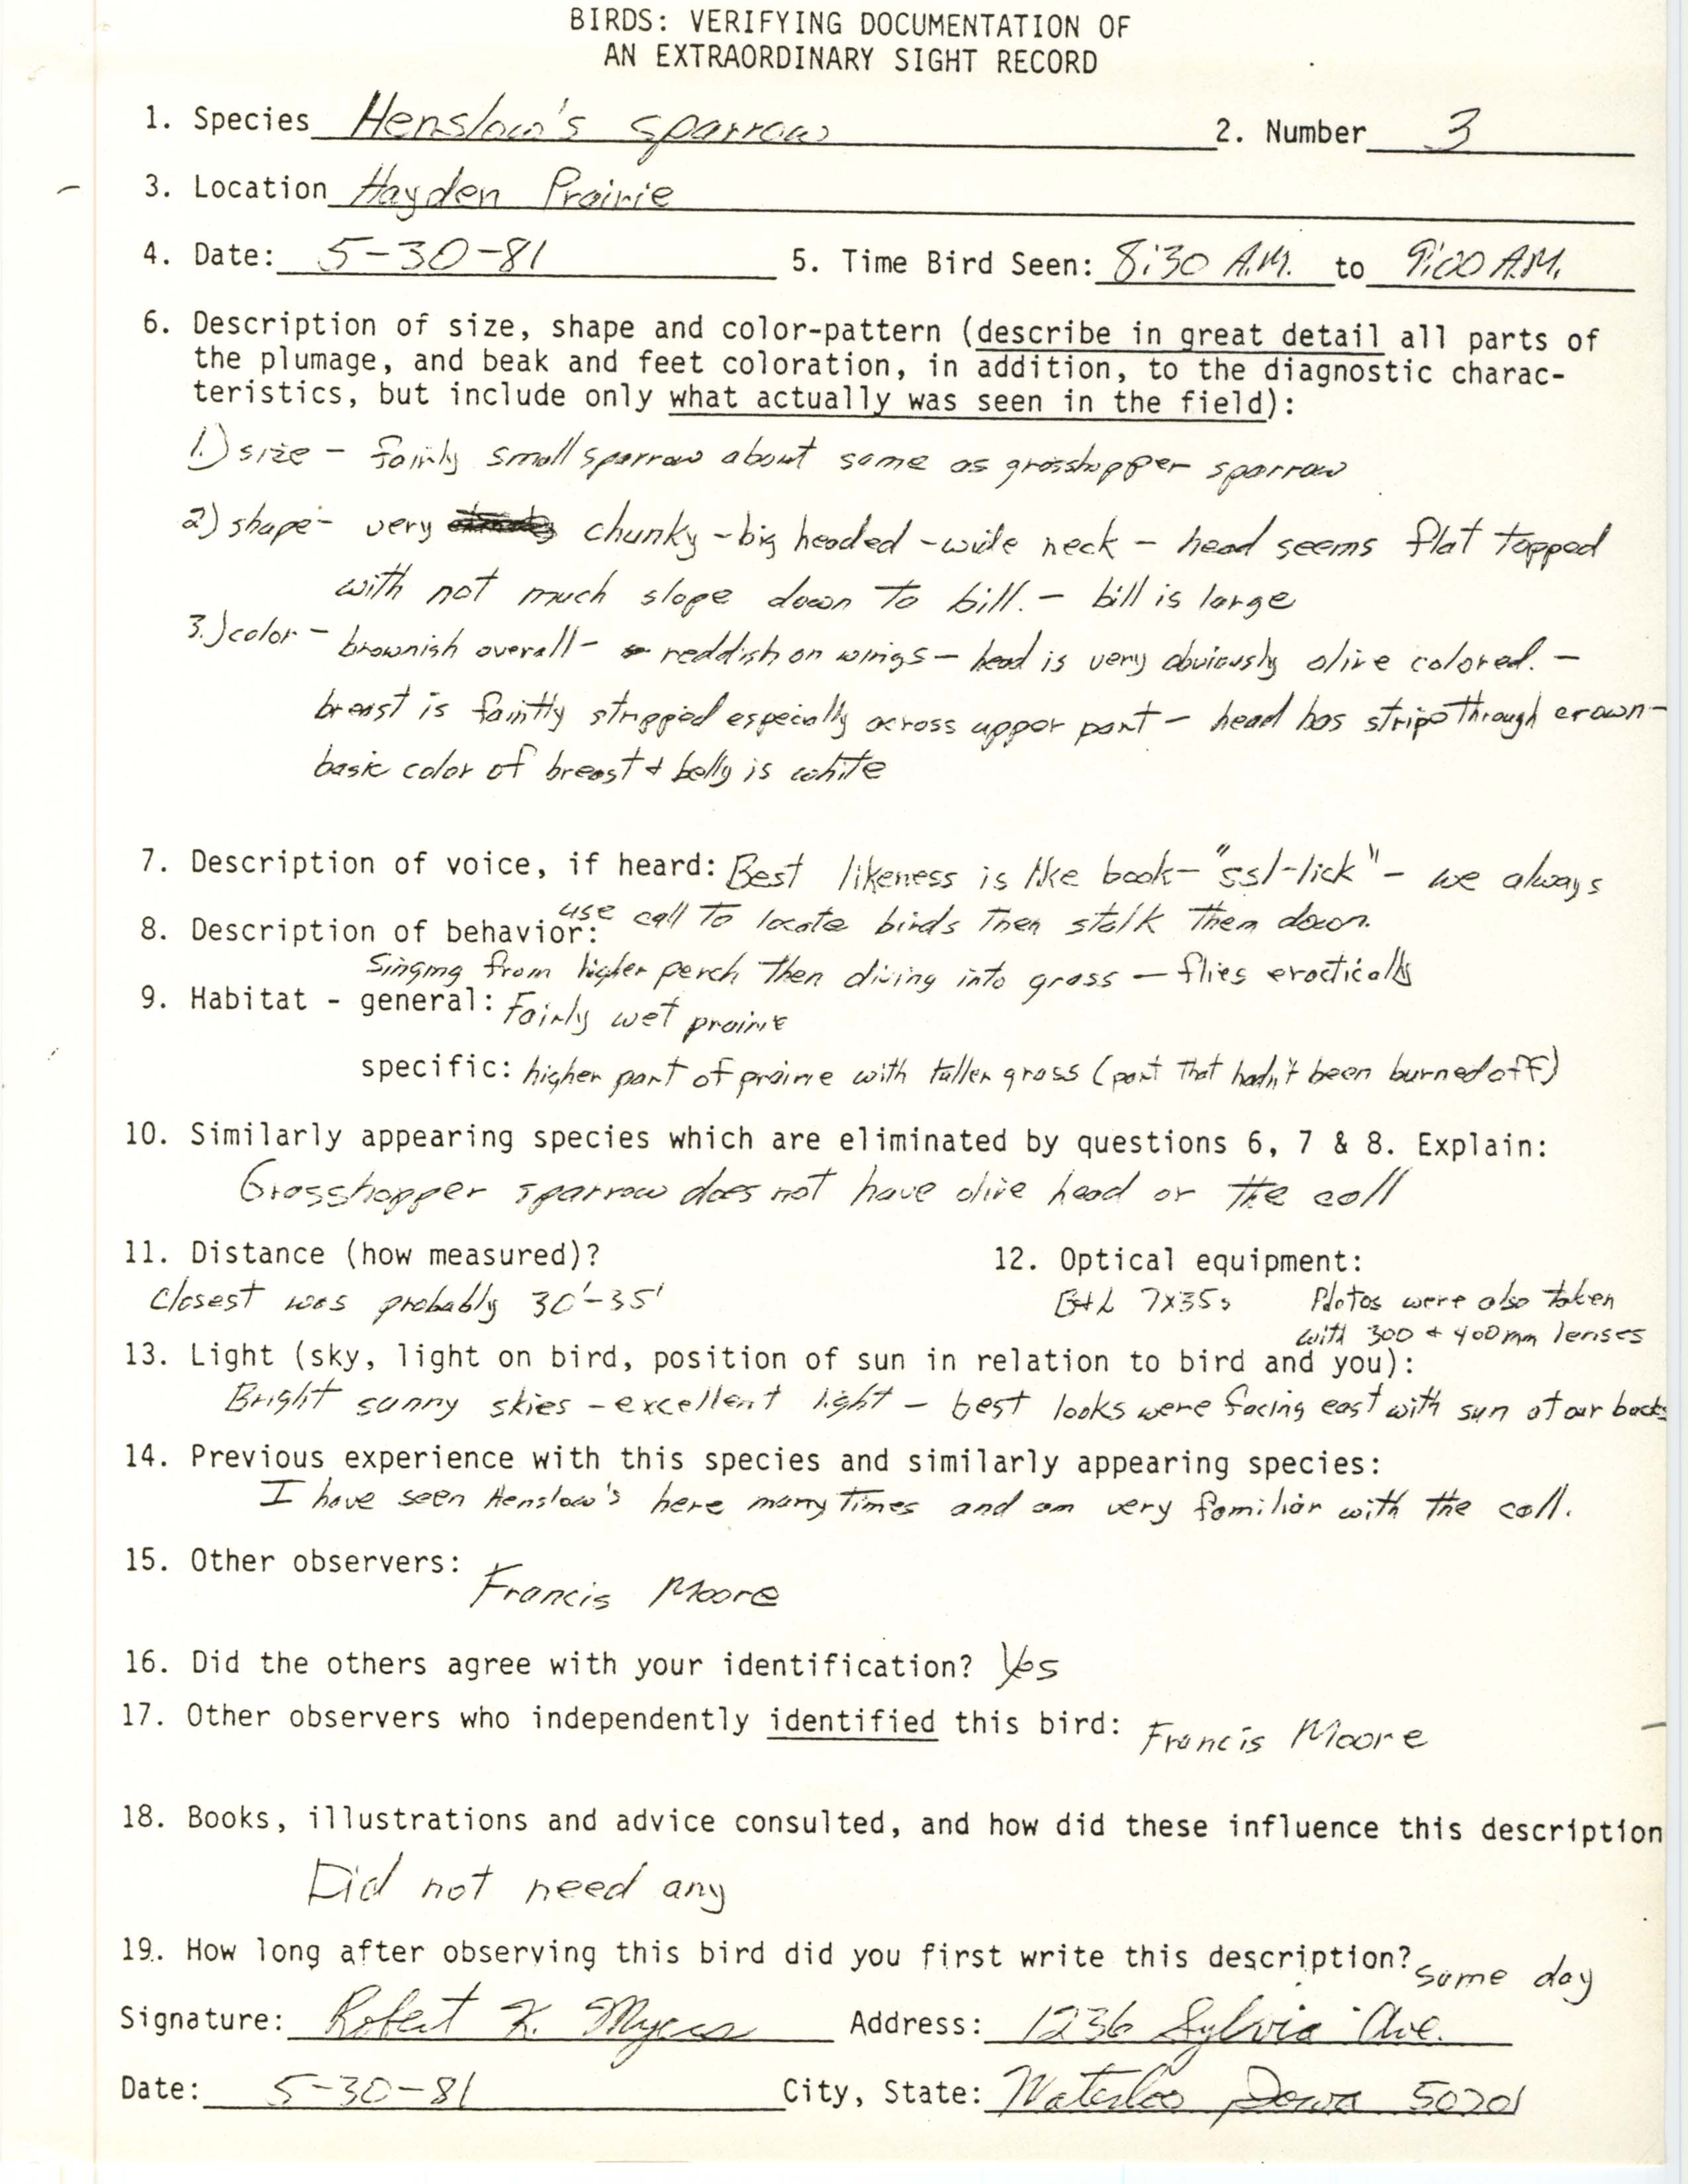 Rare bird documentation form for Henslow's Sparrow at Hayden Prairie in 1981